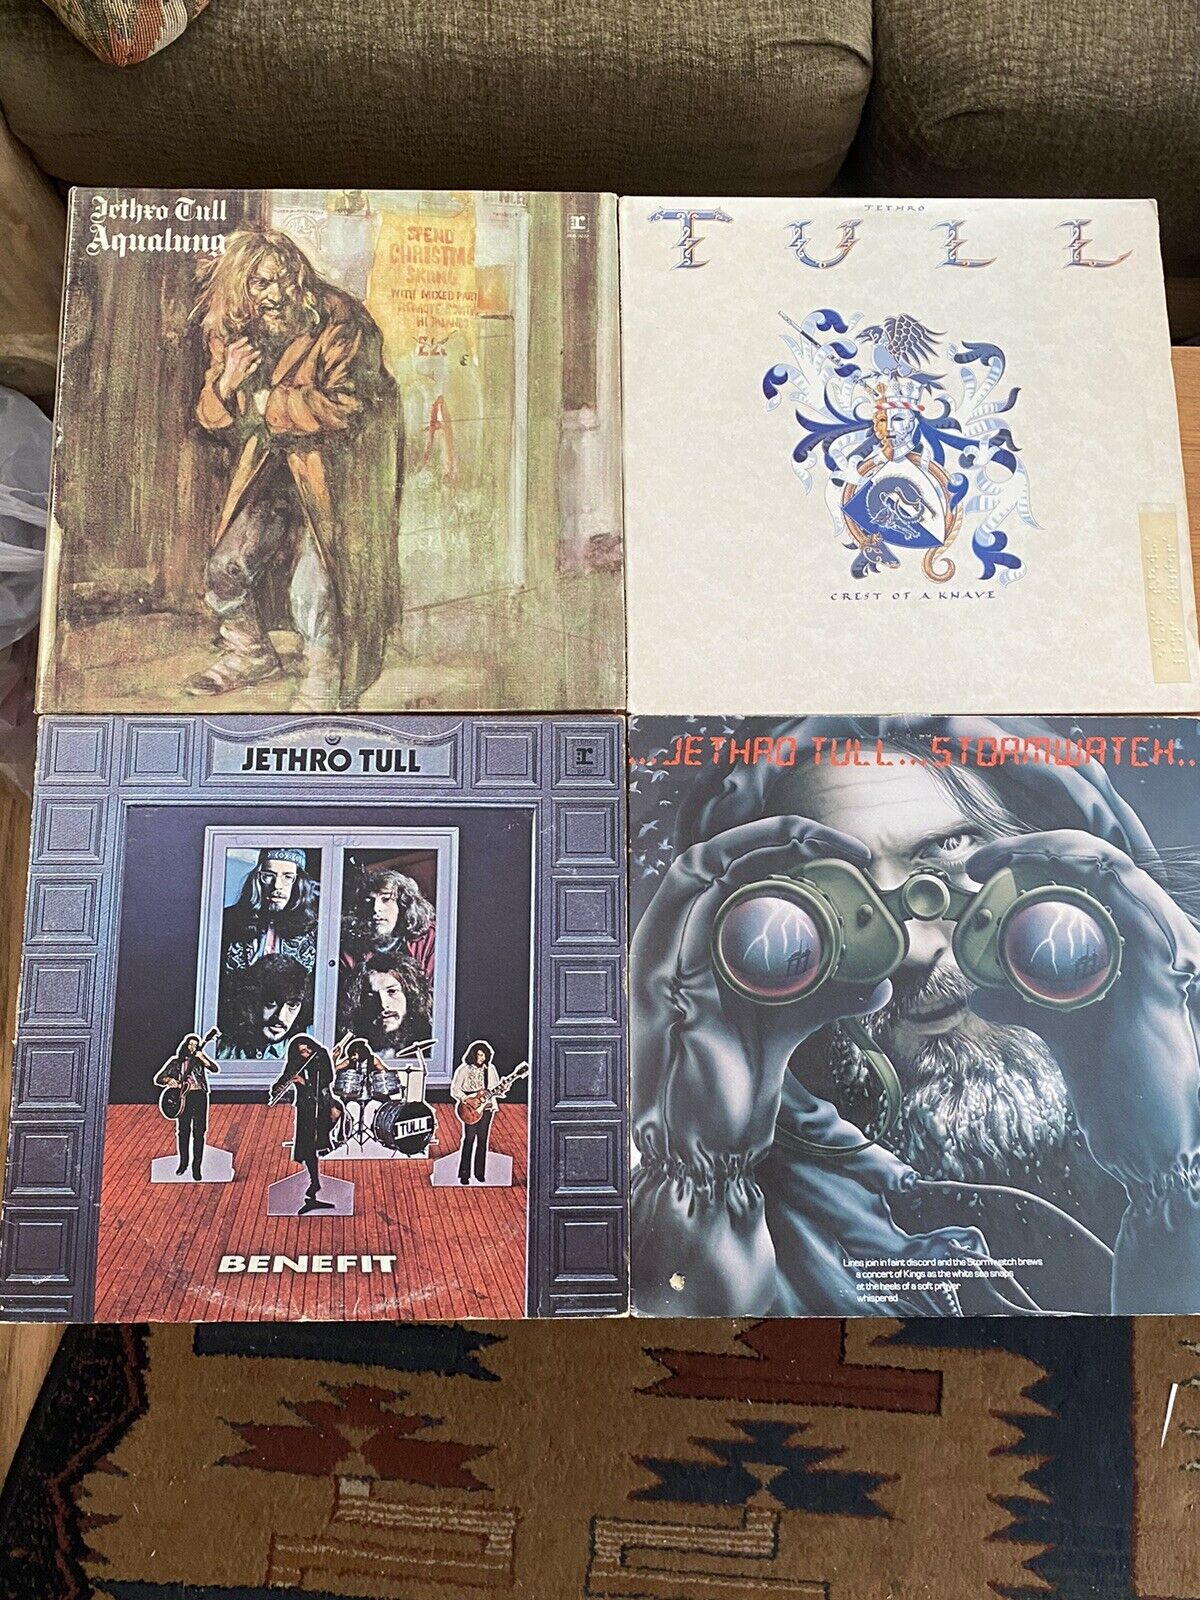 Jethro Tull 4 LPs: Aqualung, Benefit, Stormwatch, Crest of a Knave XLNT vinyl